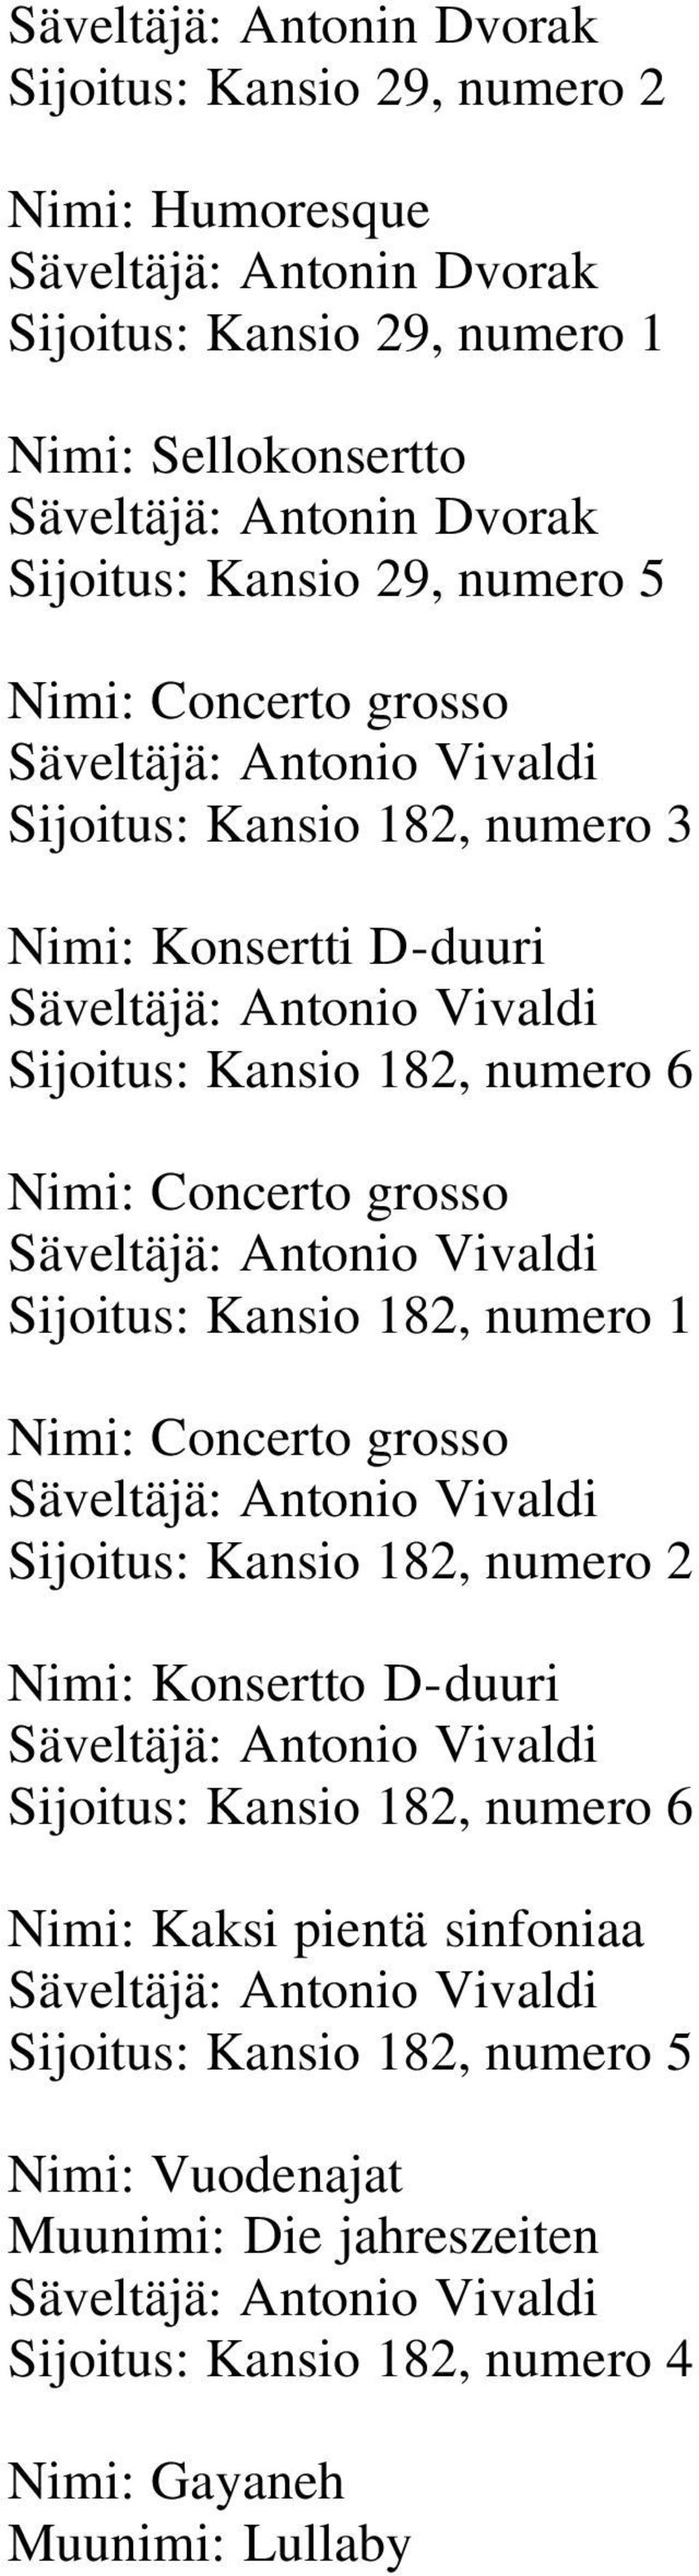 Säveltäjä: Antonio Vivaldi Sijoitus: Kansio 182, numero 1 Nimi: Concerto grosso Säveltäjä: Antonio Vivaldi Sijoitus: Kansio 182, numero 2 Nimi: Konsertto D-duuri Säveltäjä: Antonio Vivaldi Sijoitus: